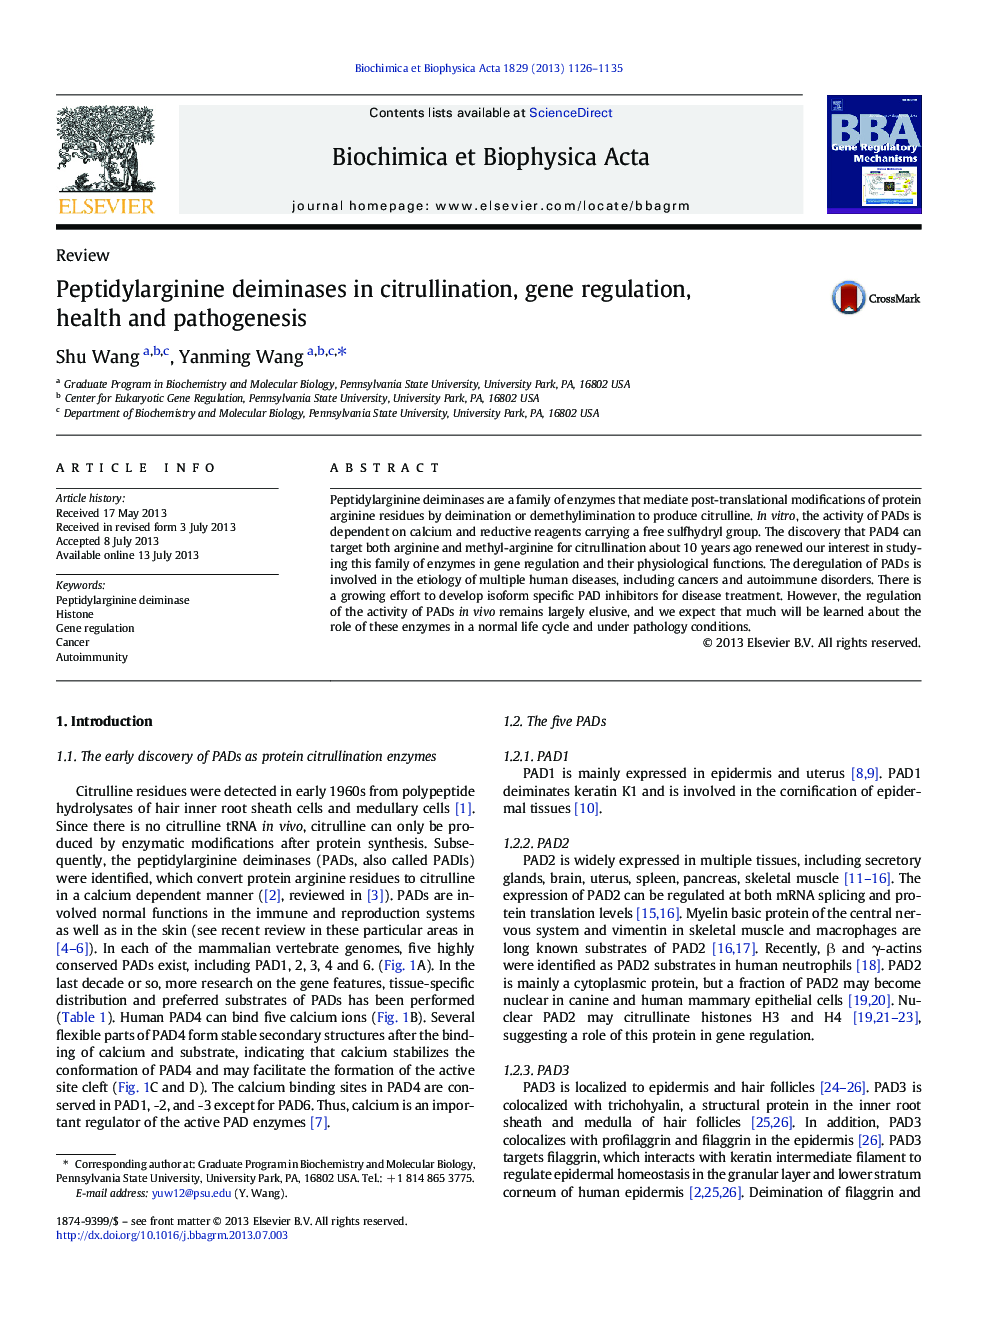 Peptidylarginine deiminases in citrullination, gene regulation, health and pathogenesis